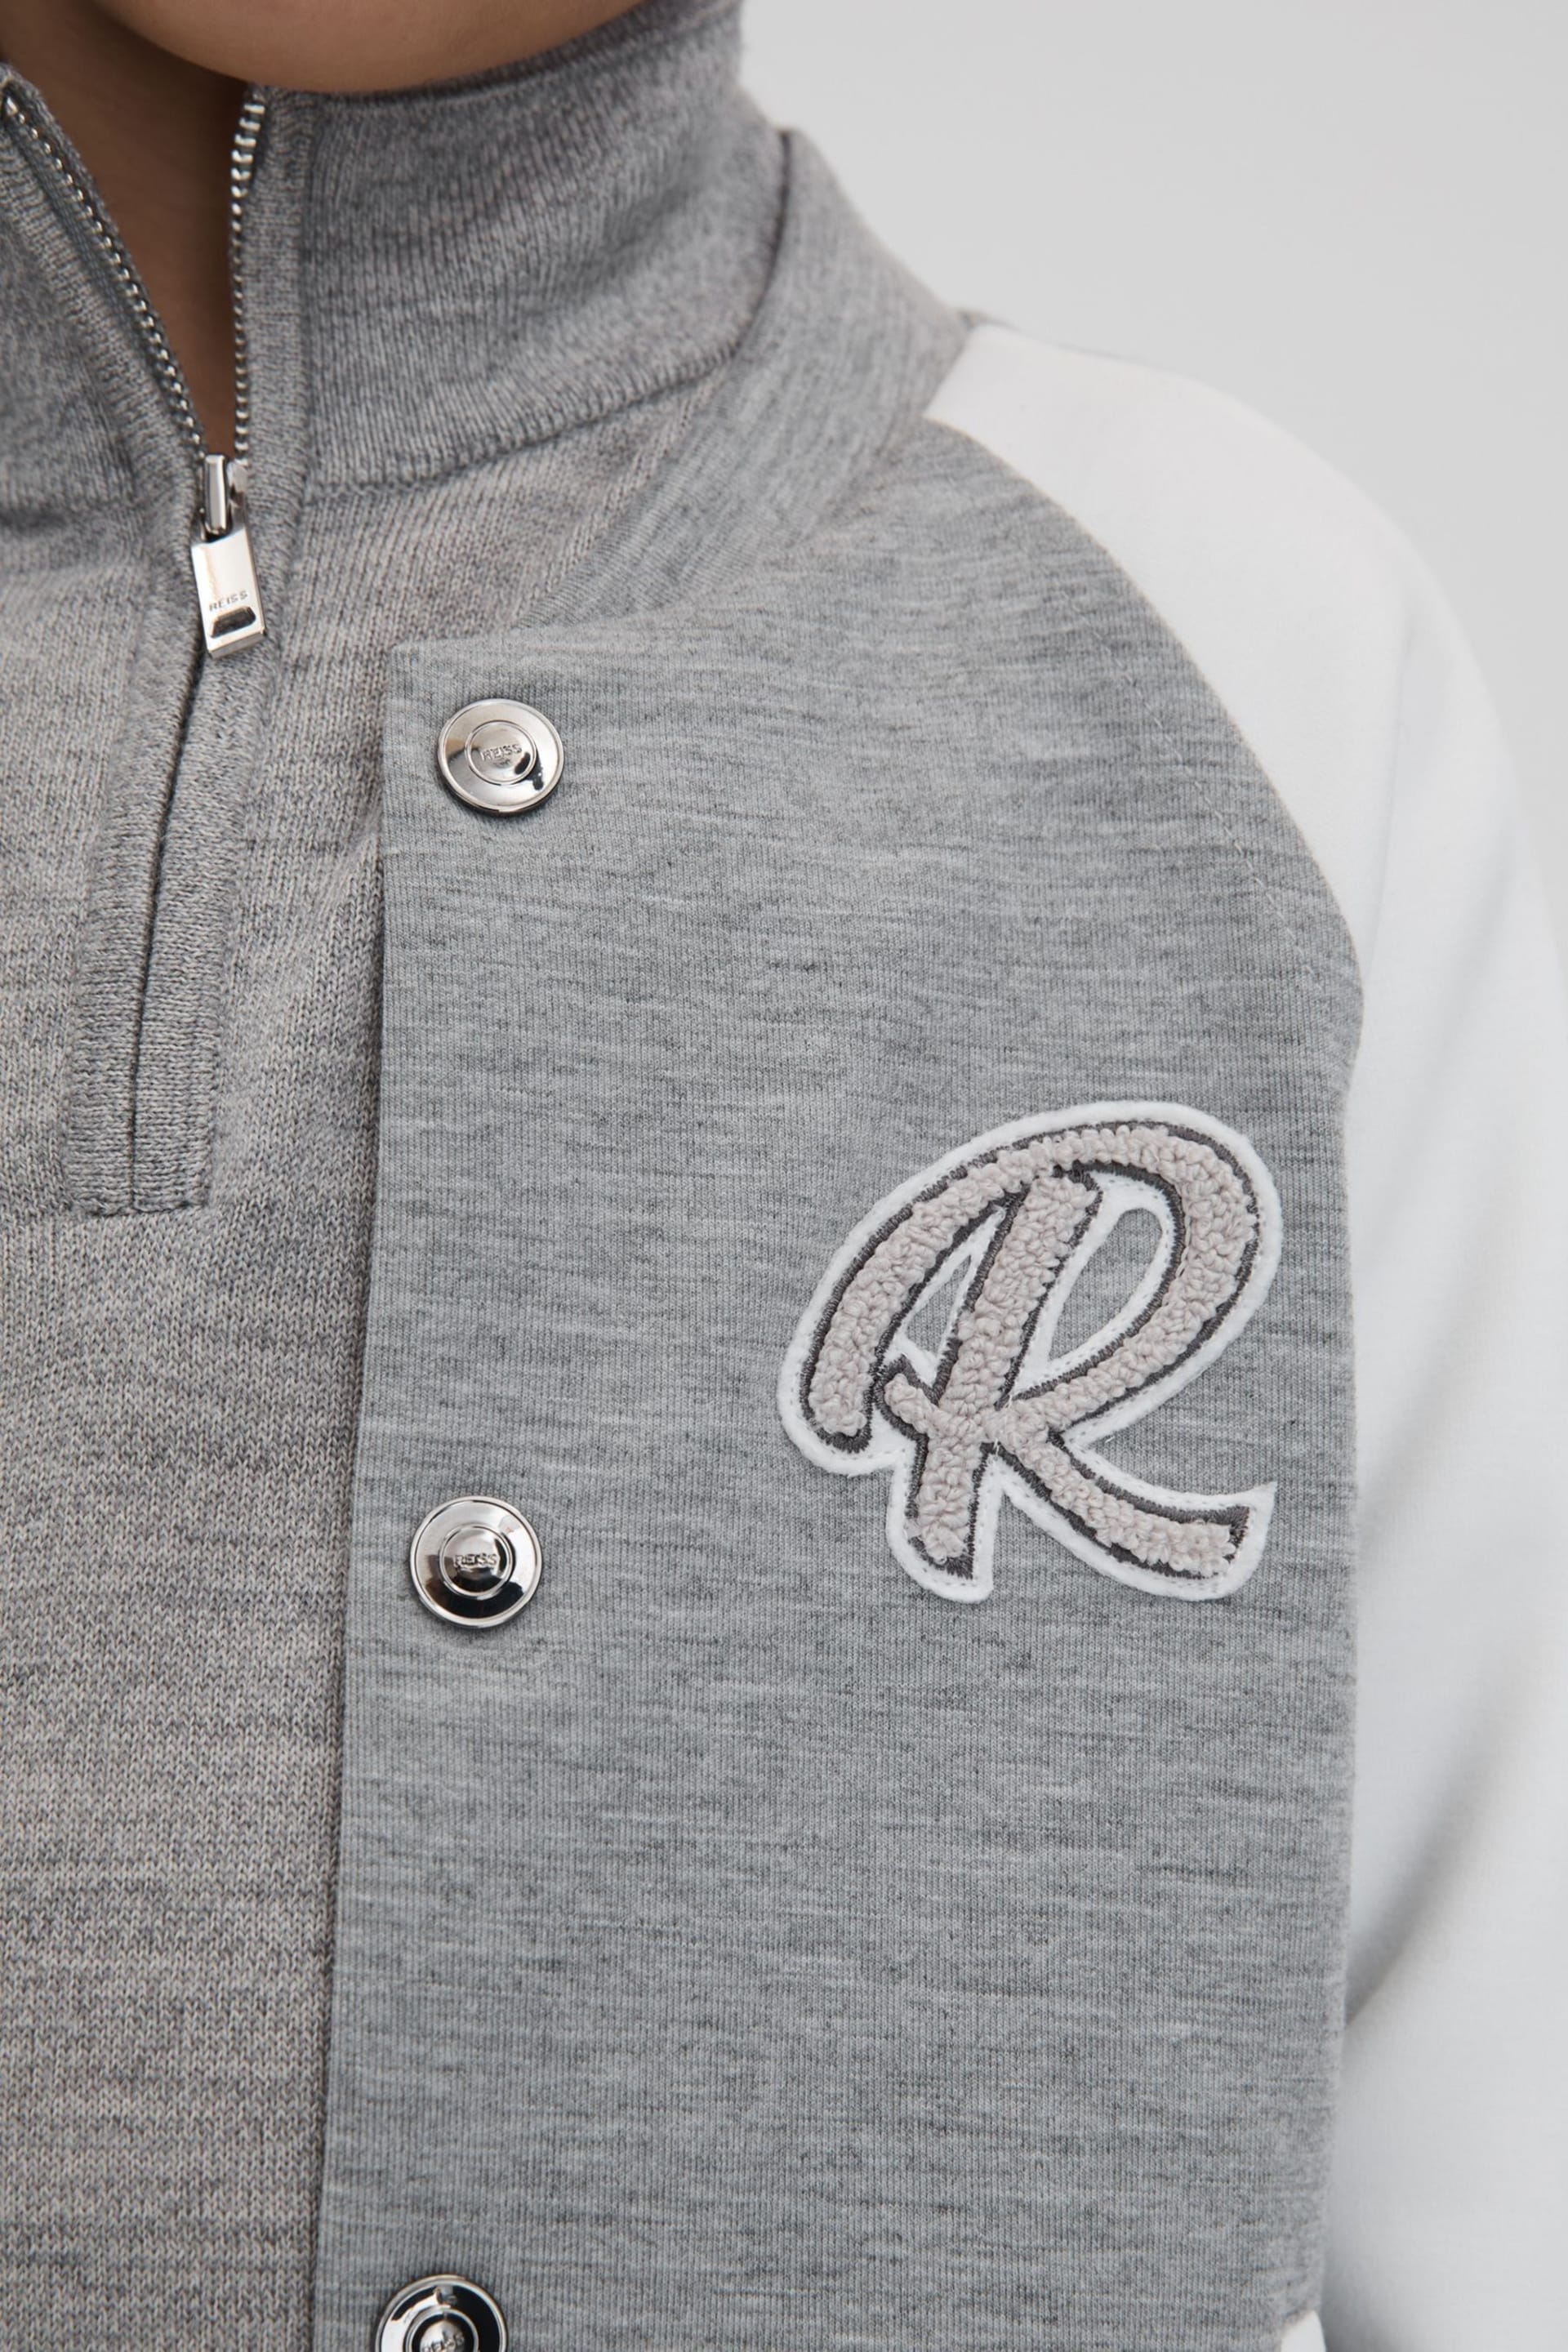 Reiss Soft Grey/White Pelham Senior Jersey Varsity Jacket - Image 4 of 6